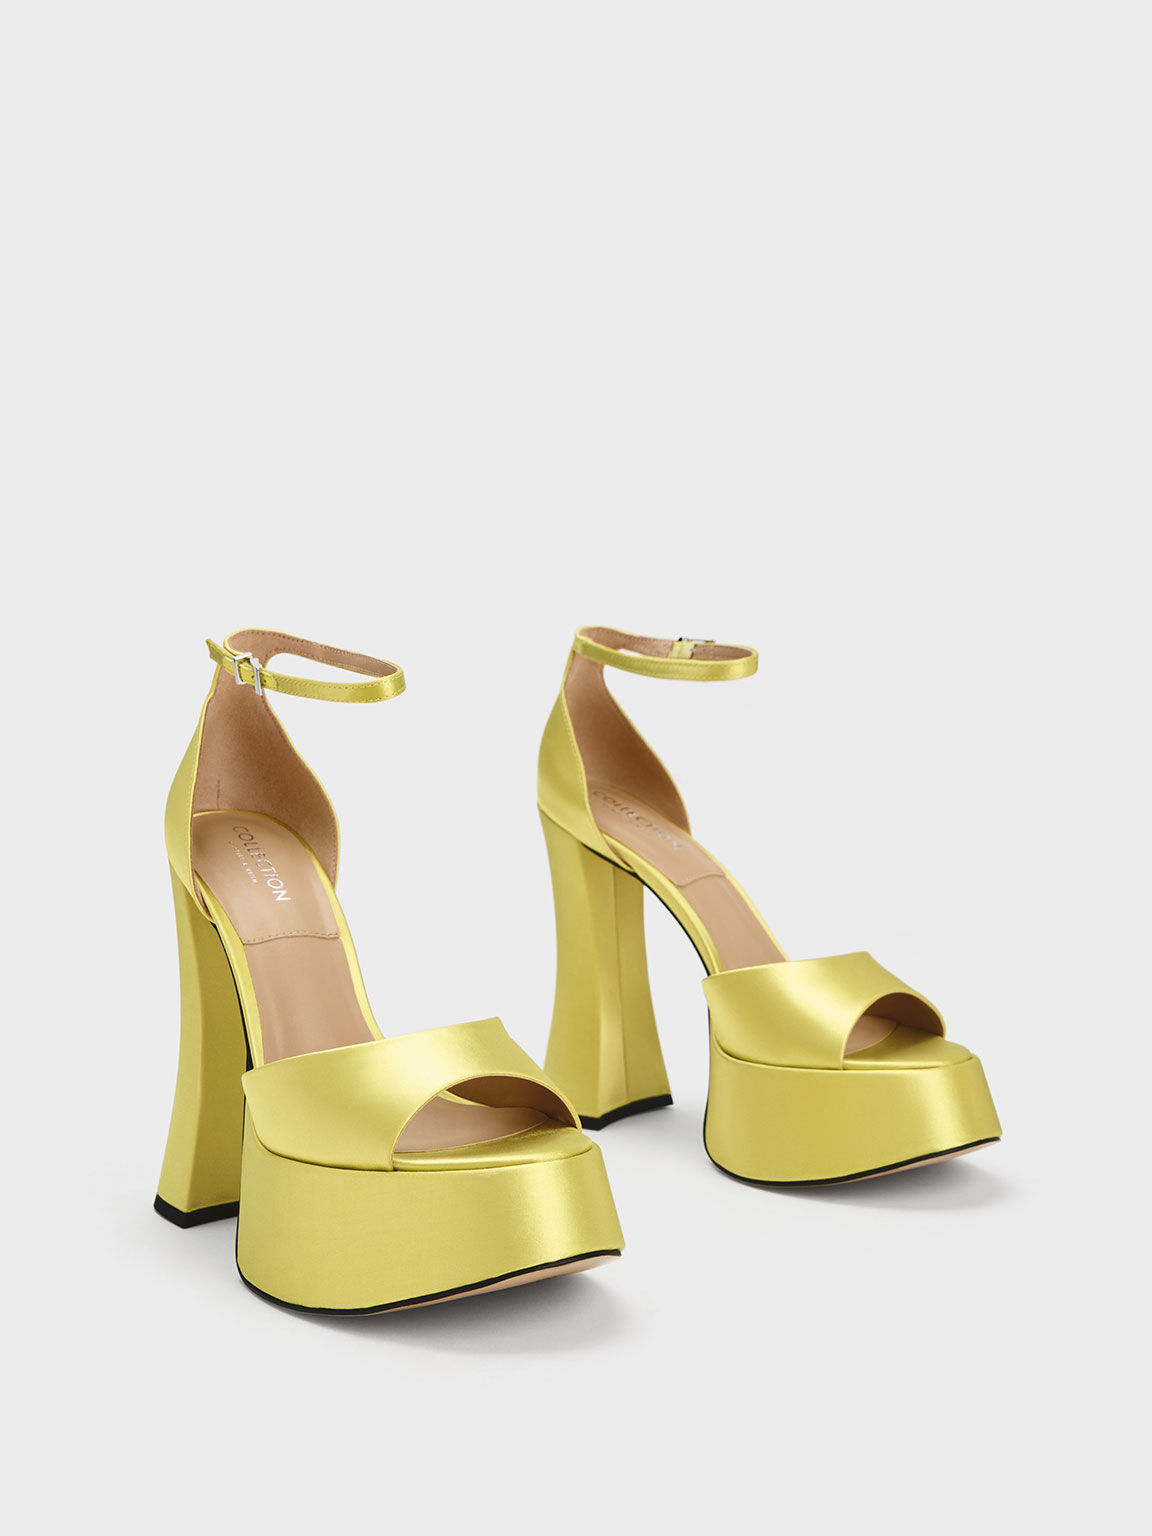 ZARA Heeled Platform Shoes With Satin Effect Fabric neon green | Zara heels,  Platform shoes, Heels